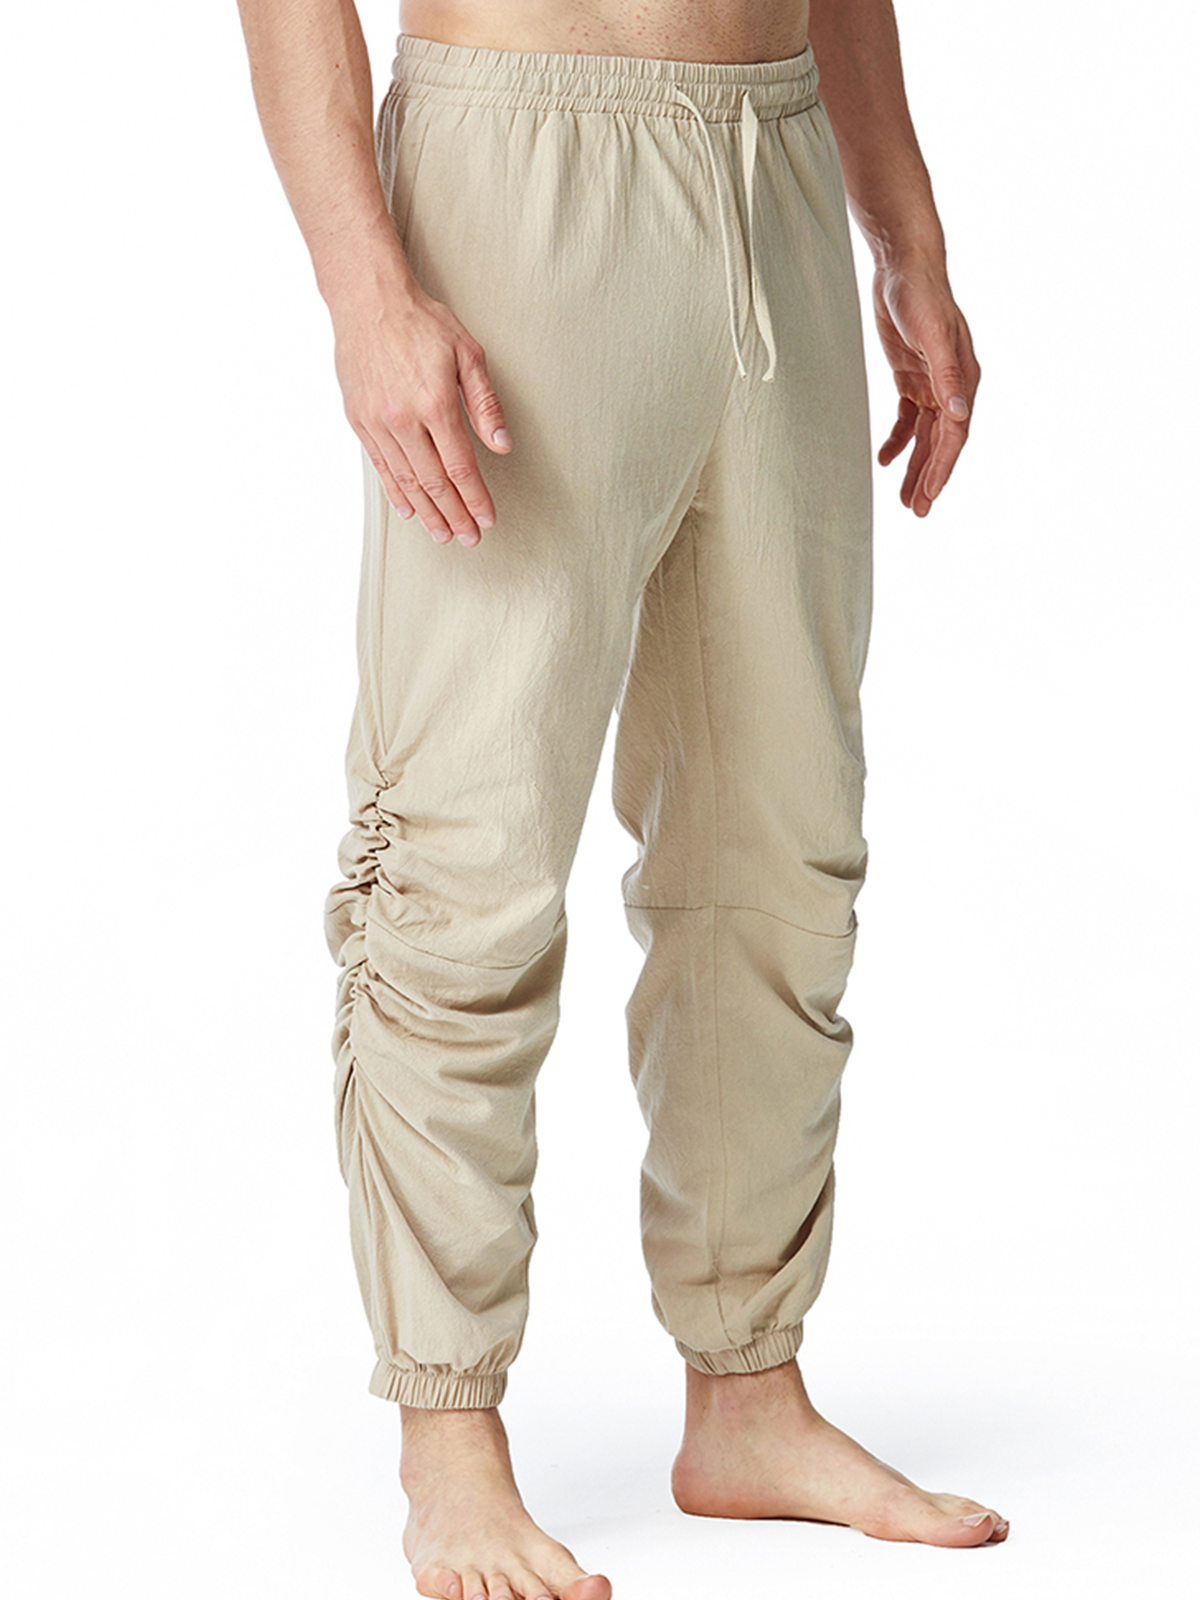 Men's Solid Color Casual Breathable Cotton Pants